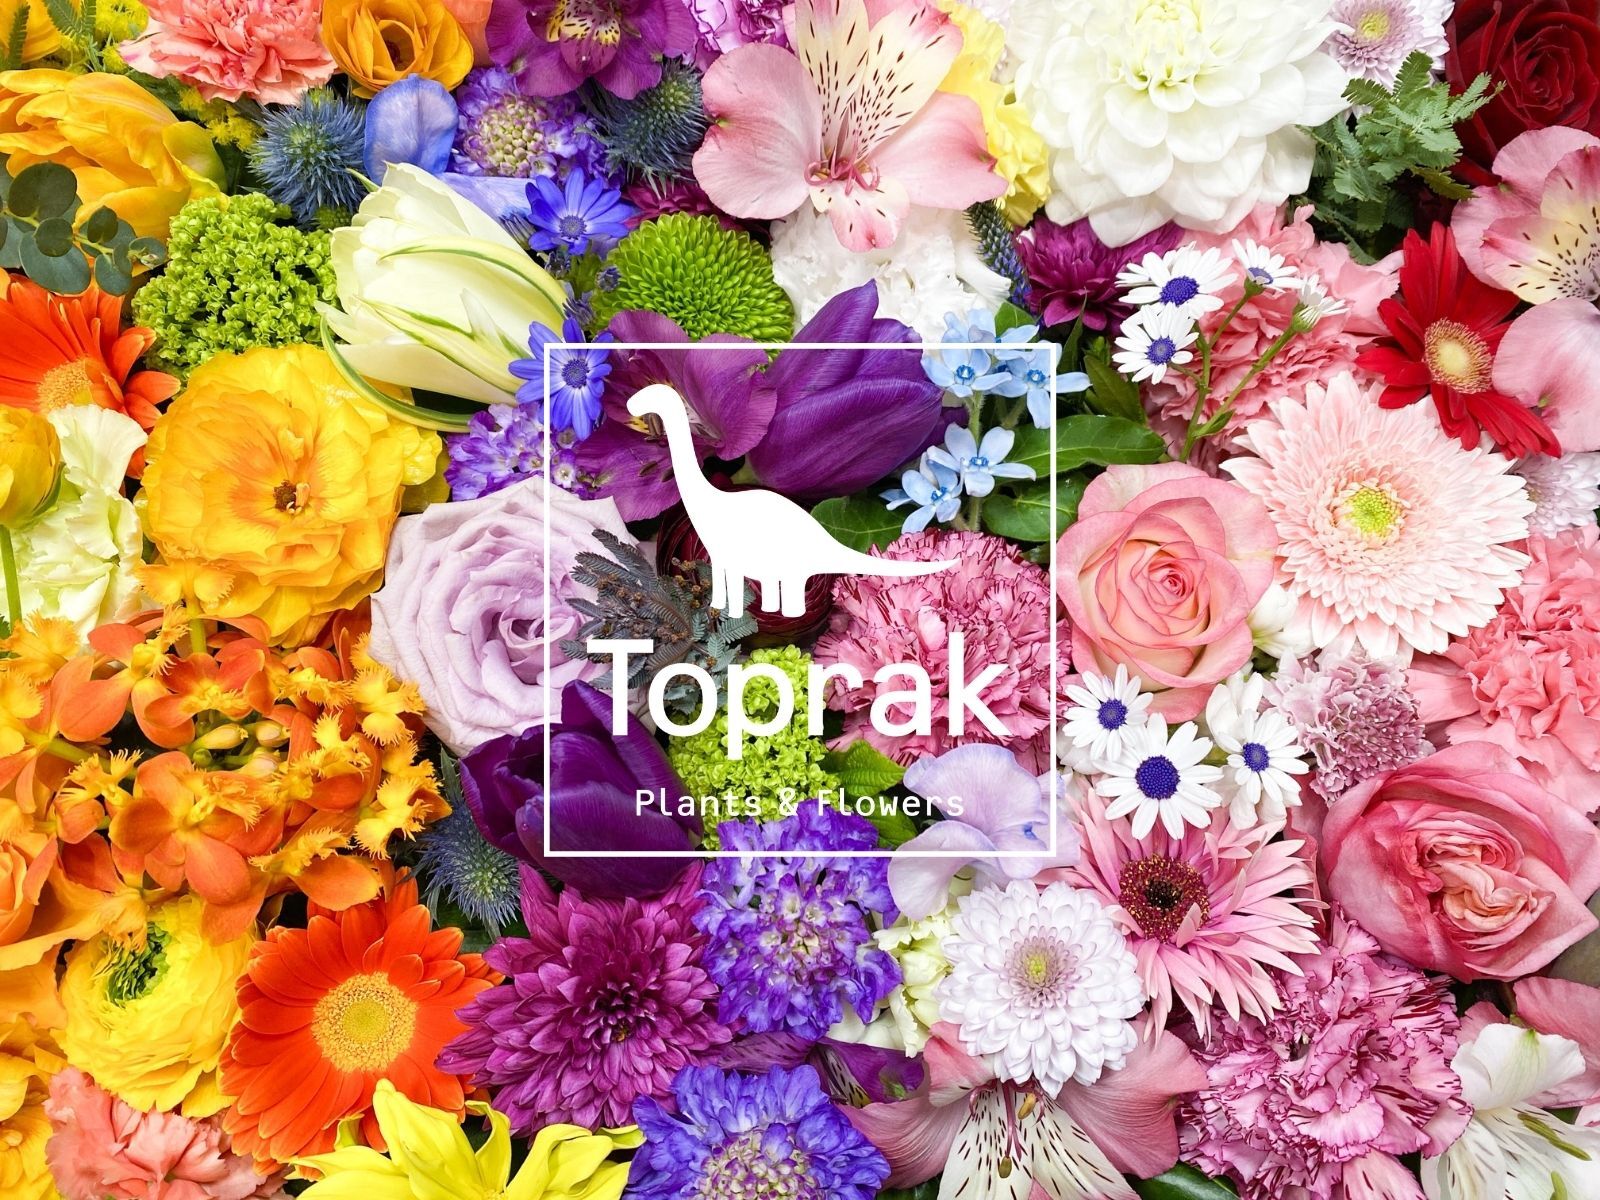 Toprak Plants & Flowers